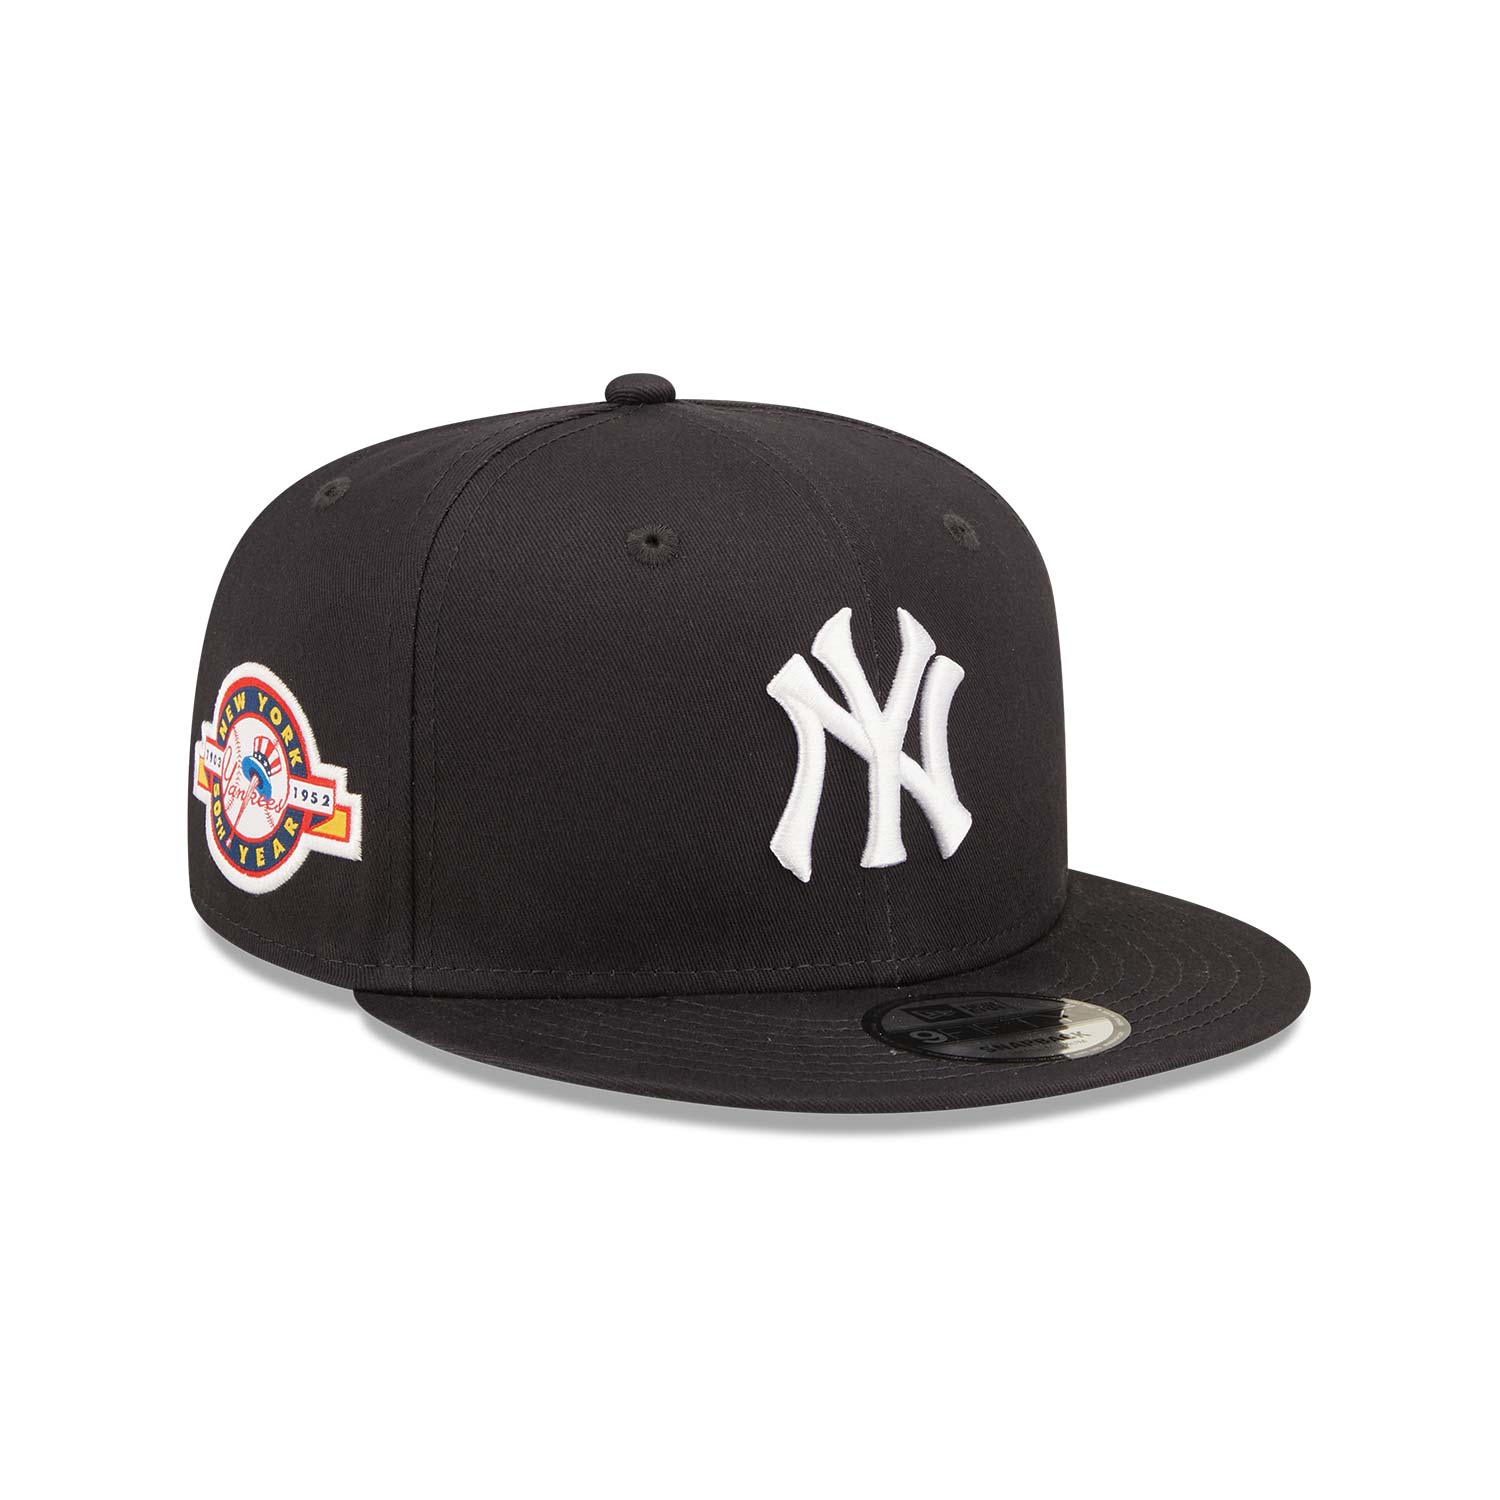 New York Yankees Cooperstown Navy 9FIFTY Snapback Cap